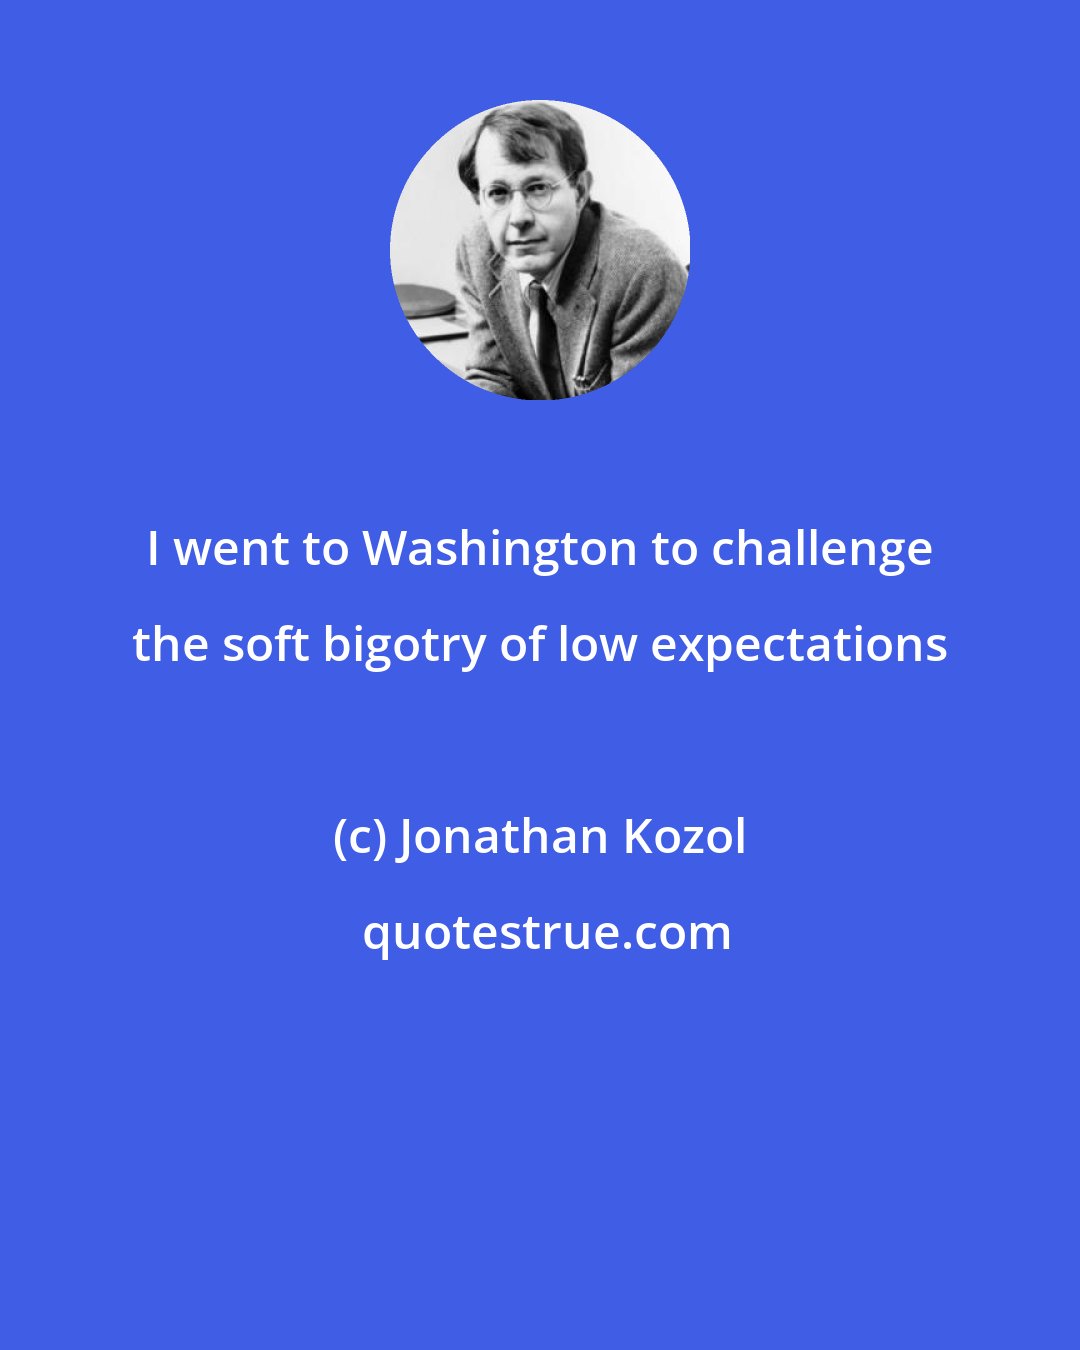 Jonathan Kozol: I went to Washington to challenge the soft bigotry of low expectations